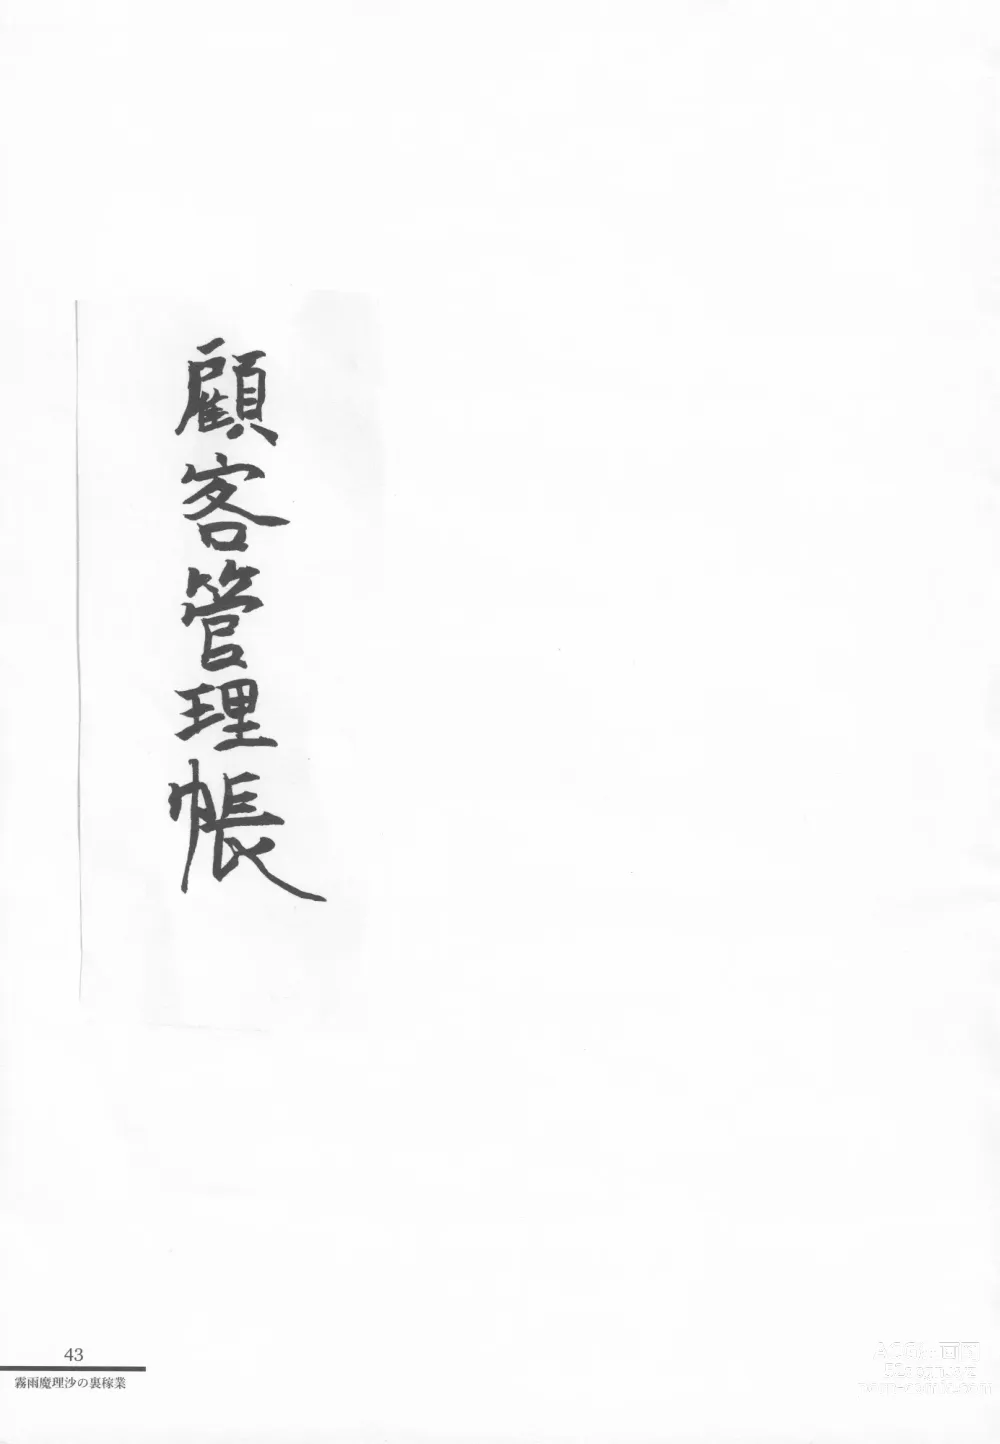 Page 42 of doujinshi Kirisame Mahouten Ura Course Goudou Kirisame Marisa no Ura Kagyou